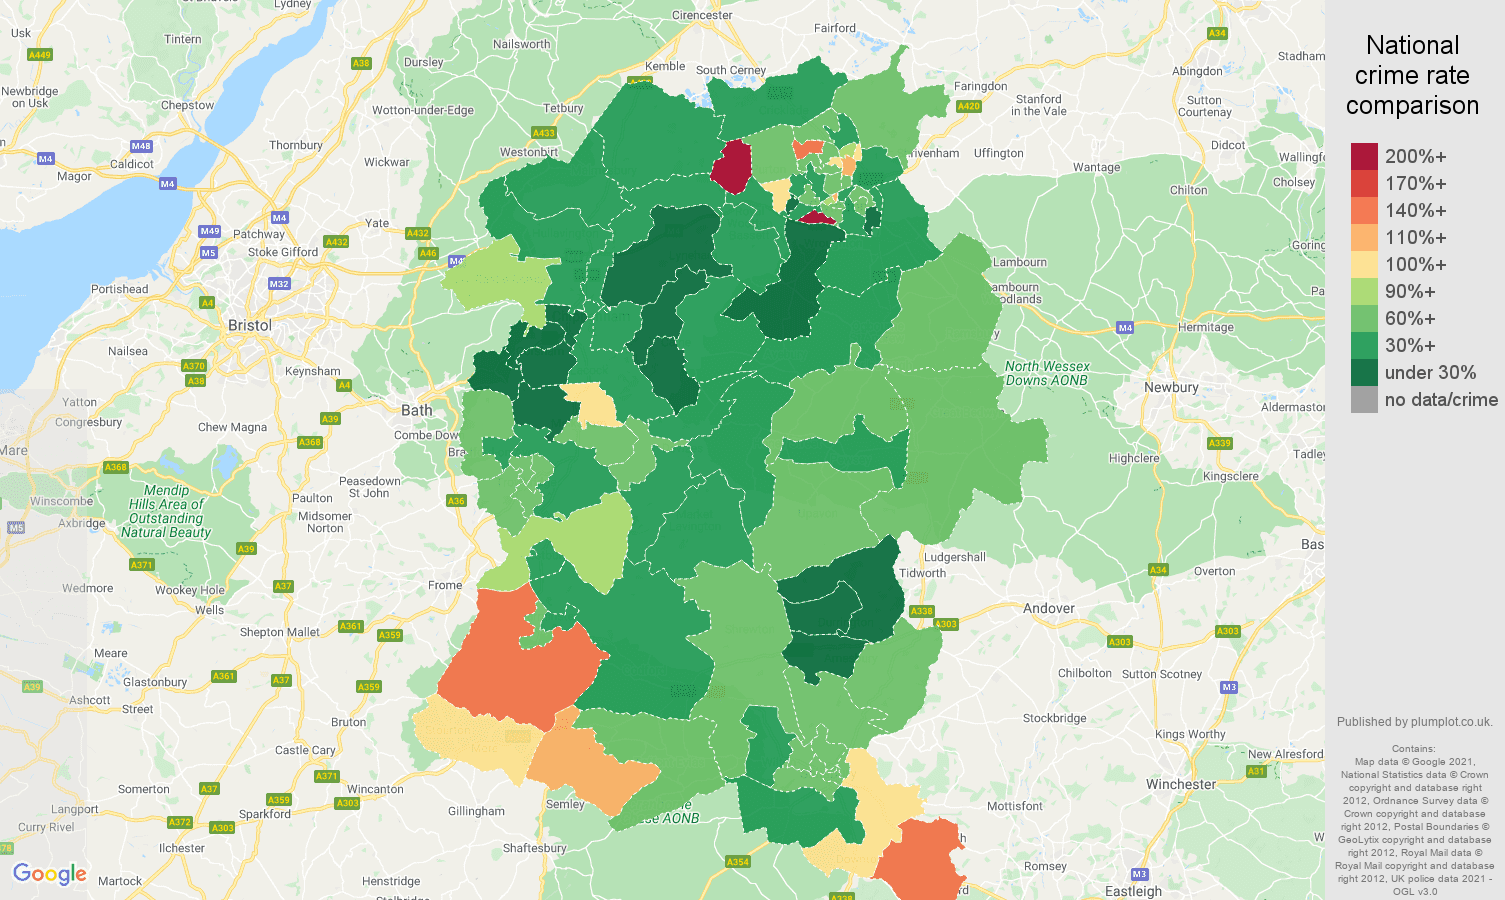 Wiltshire burglary crime rate comparison map